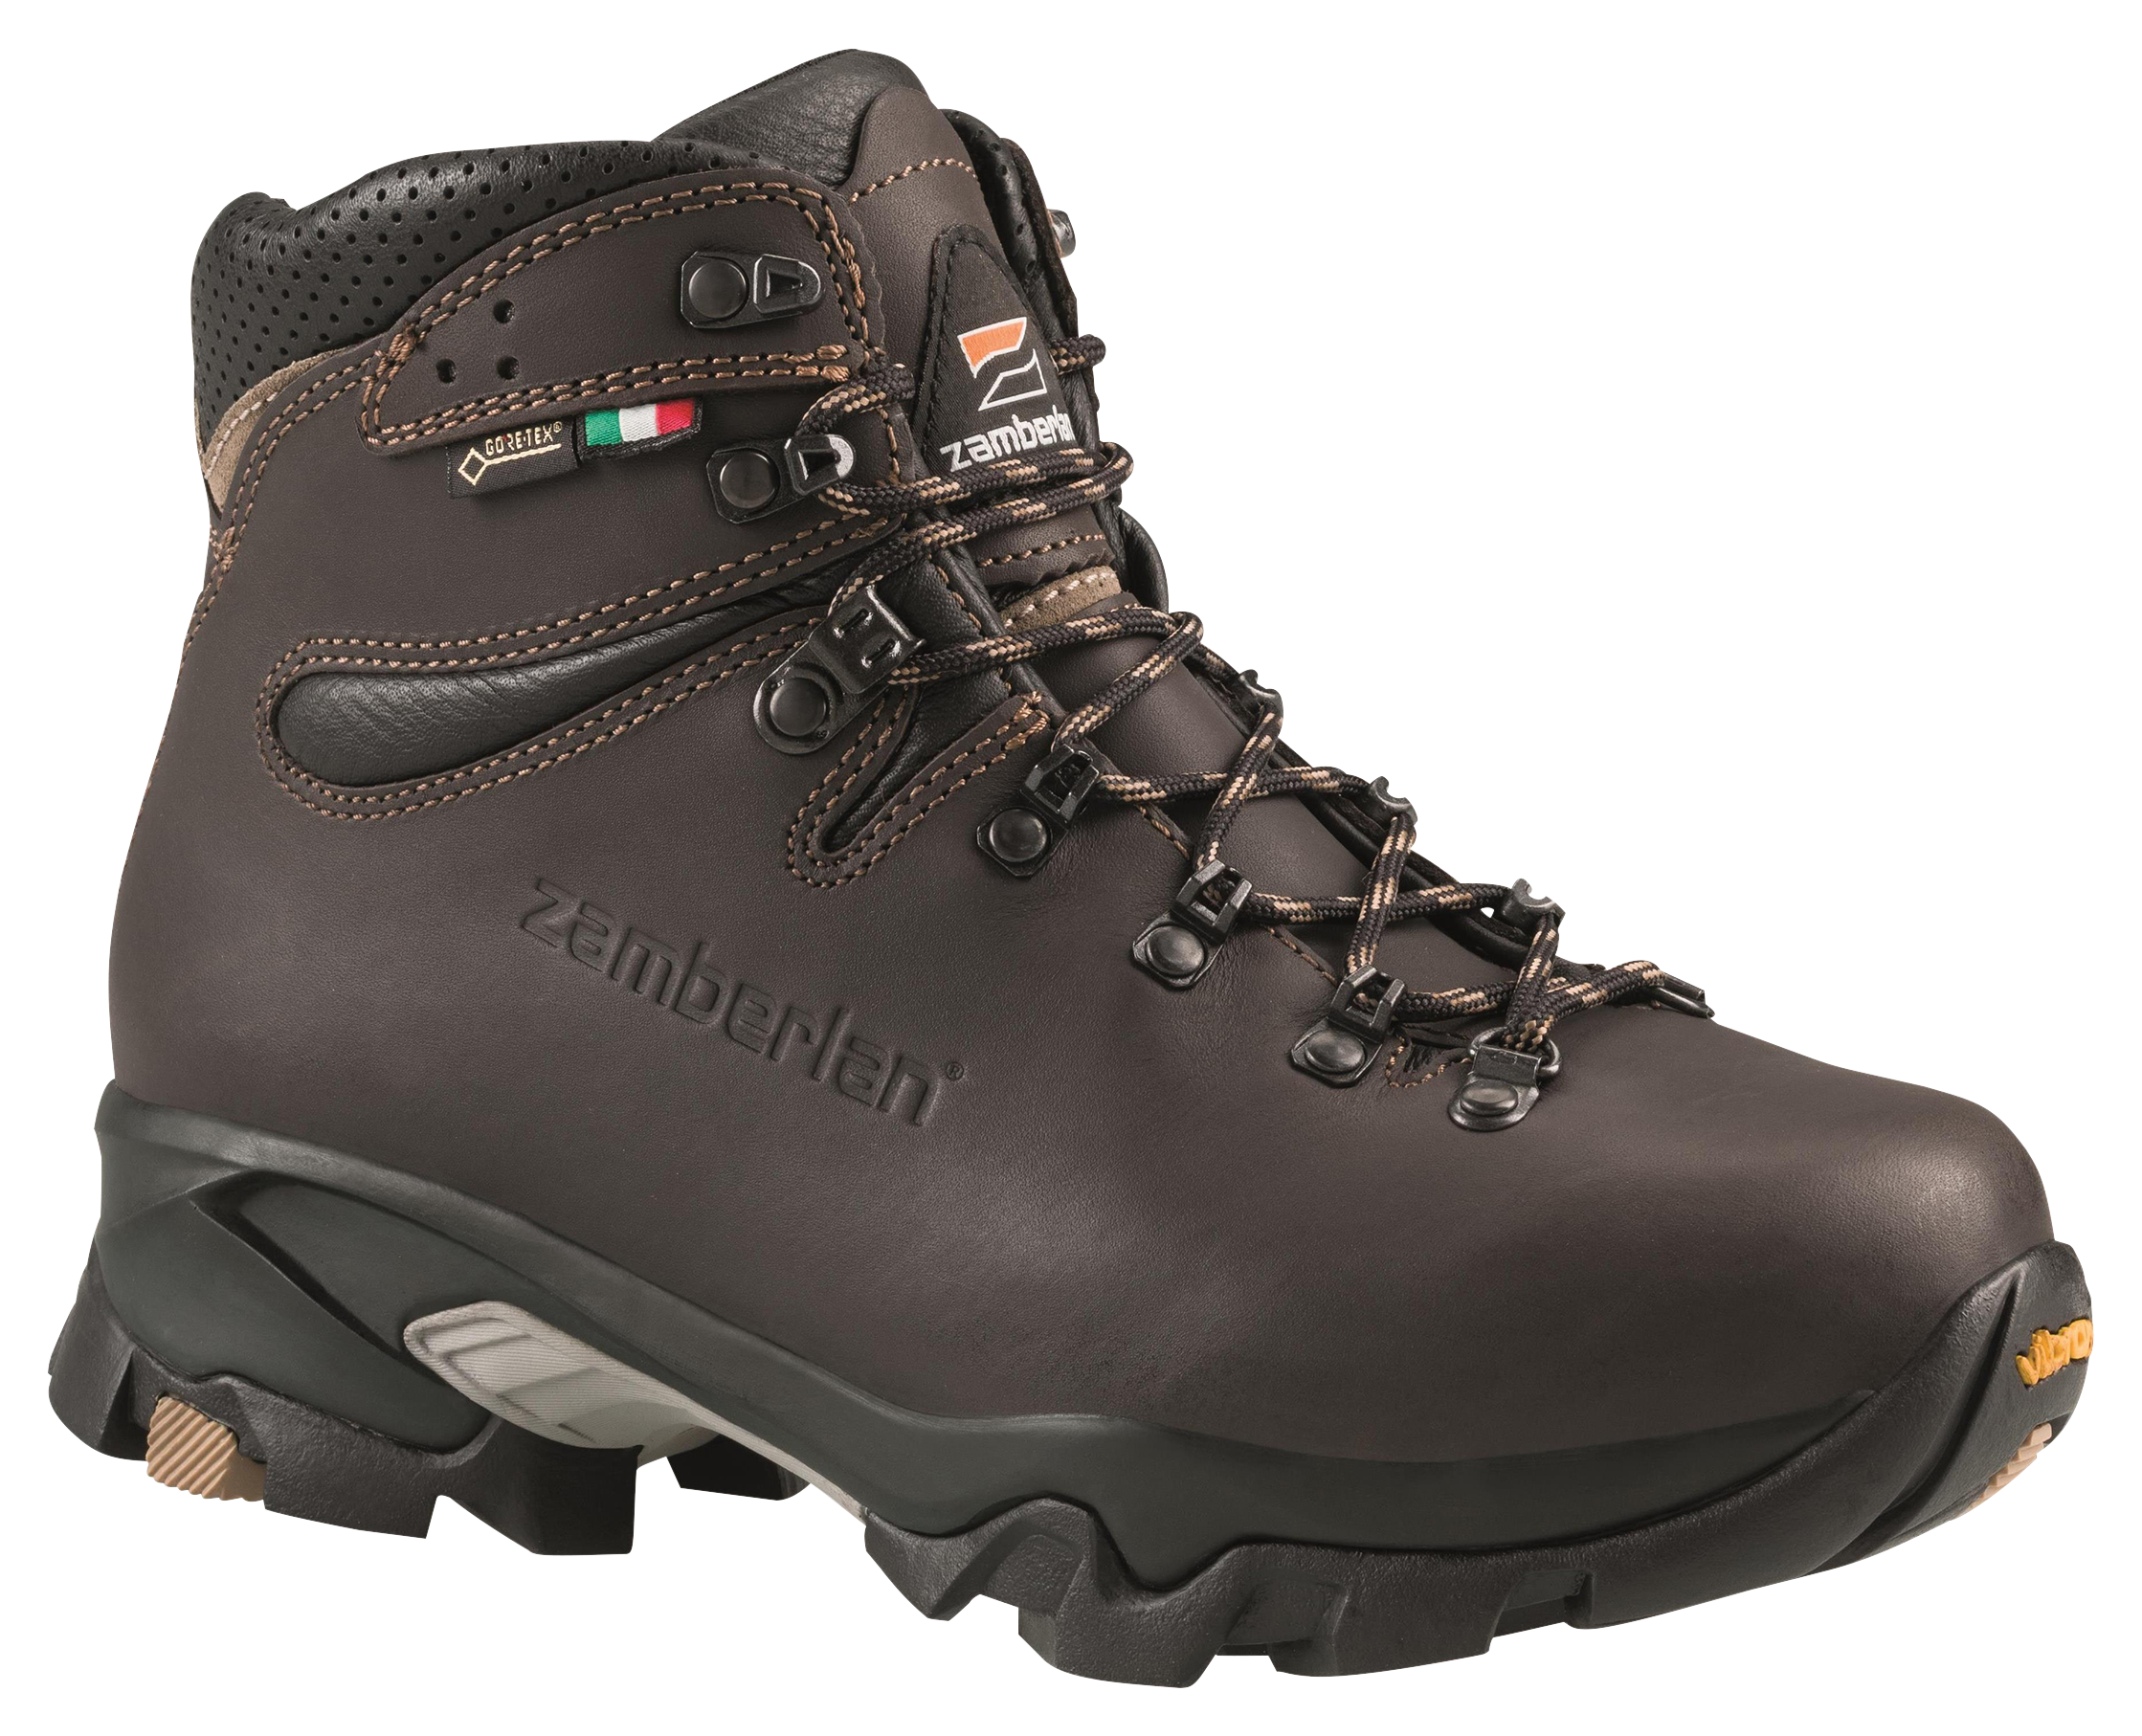 Zamberlan 996 Vioz GTX Waterproof Hiking Boots for Ladies - Dark Brown -  8.5M